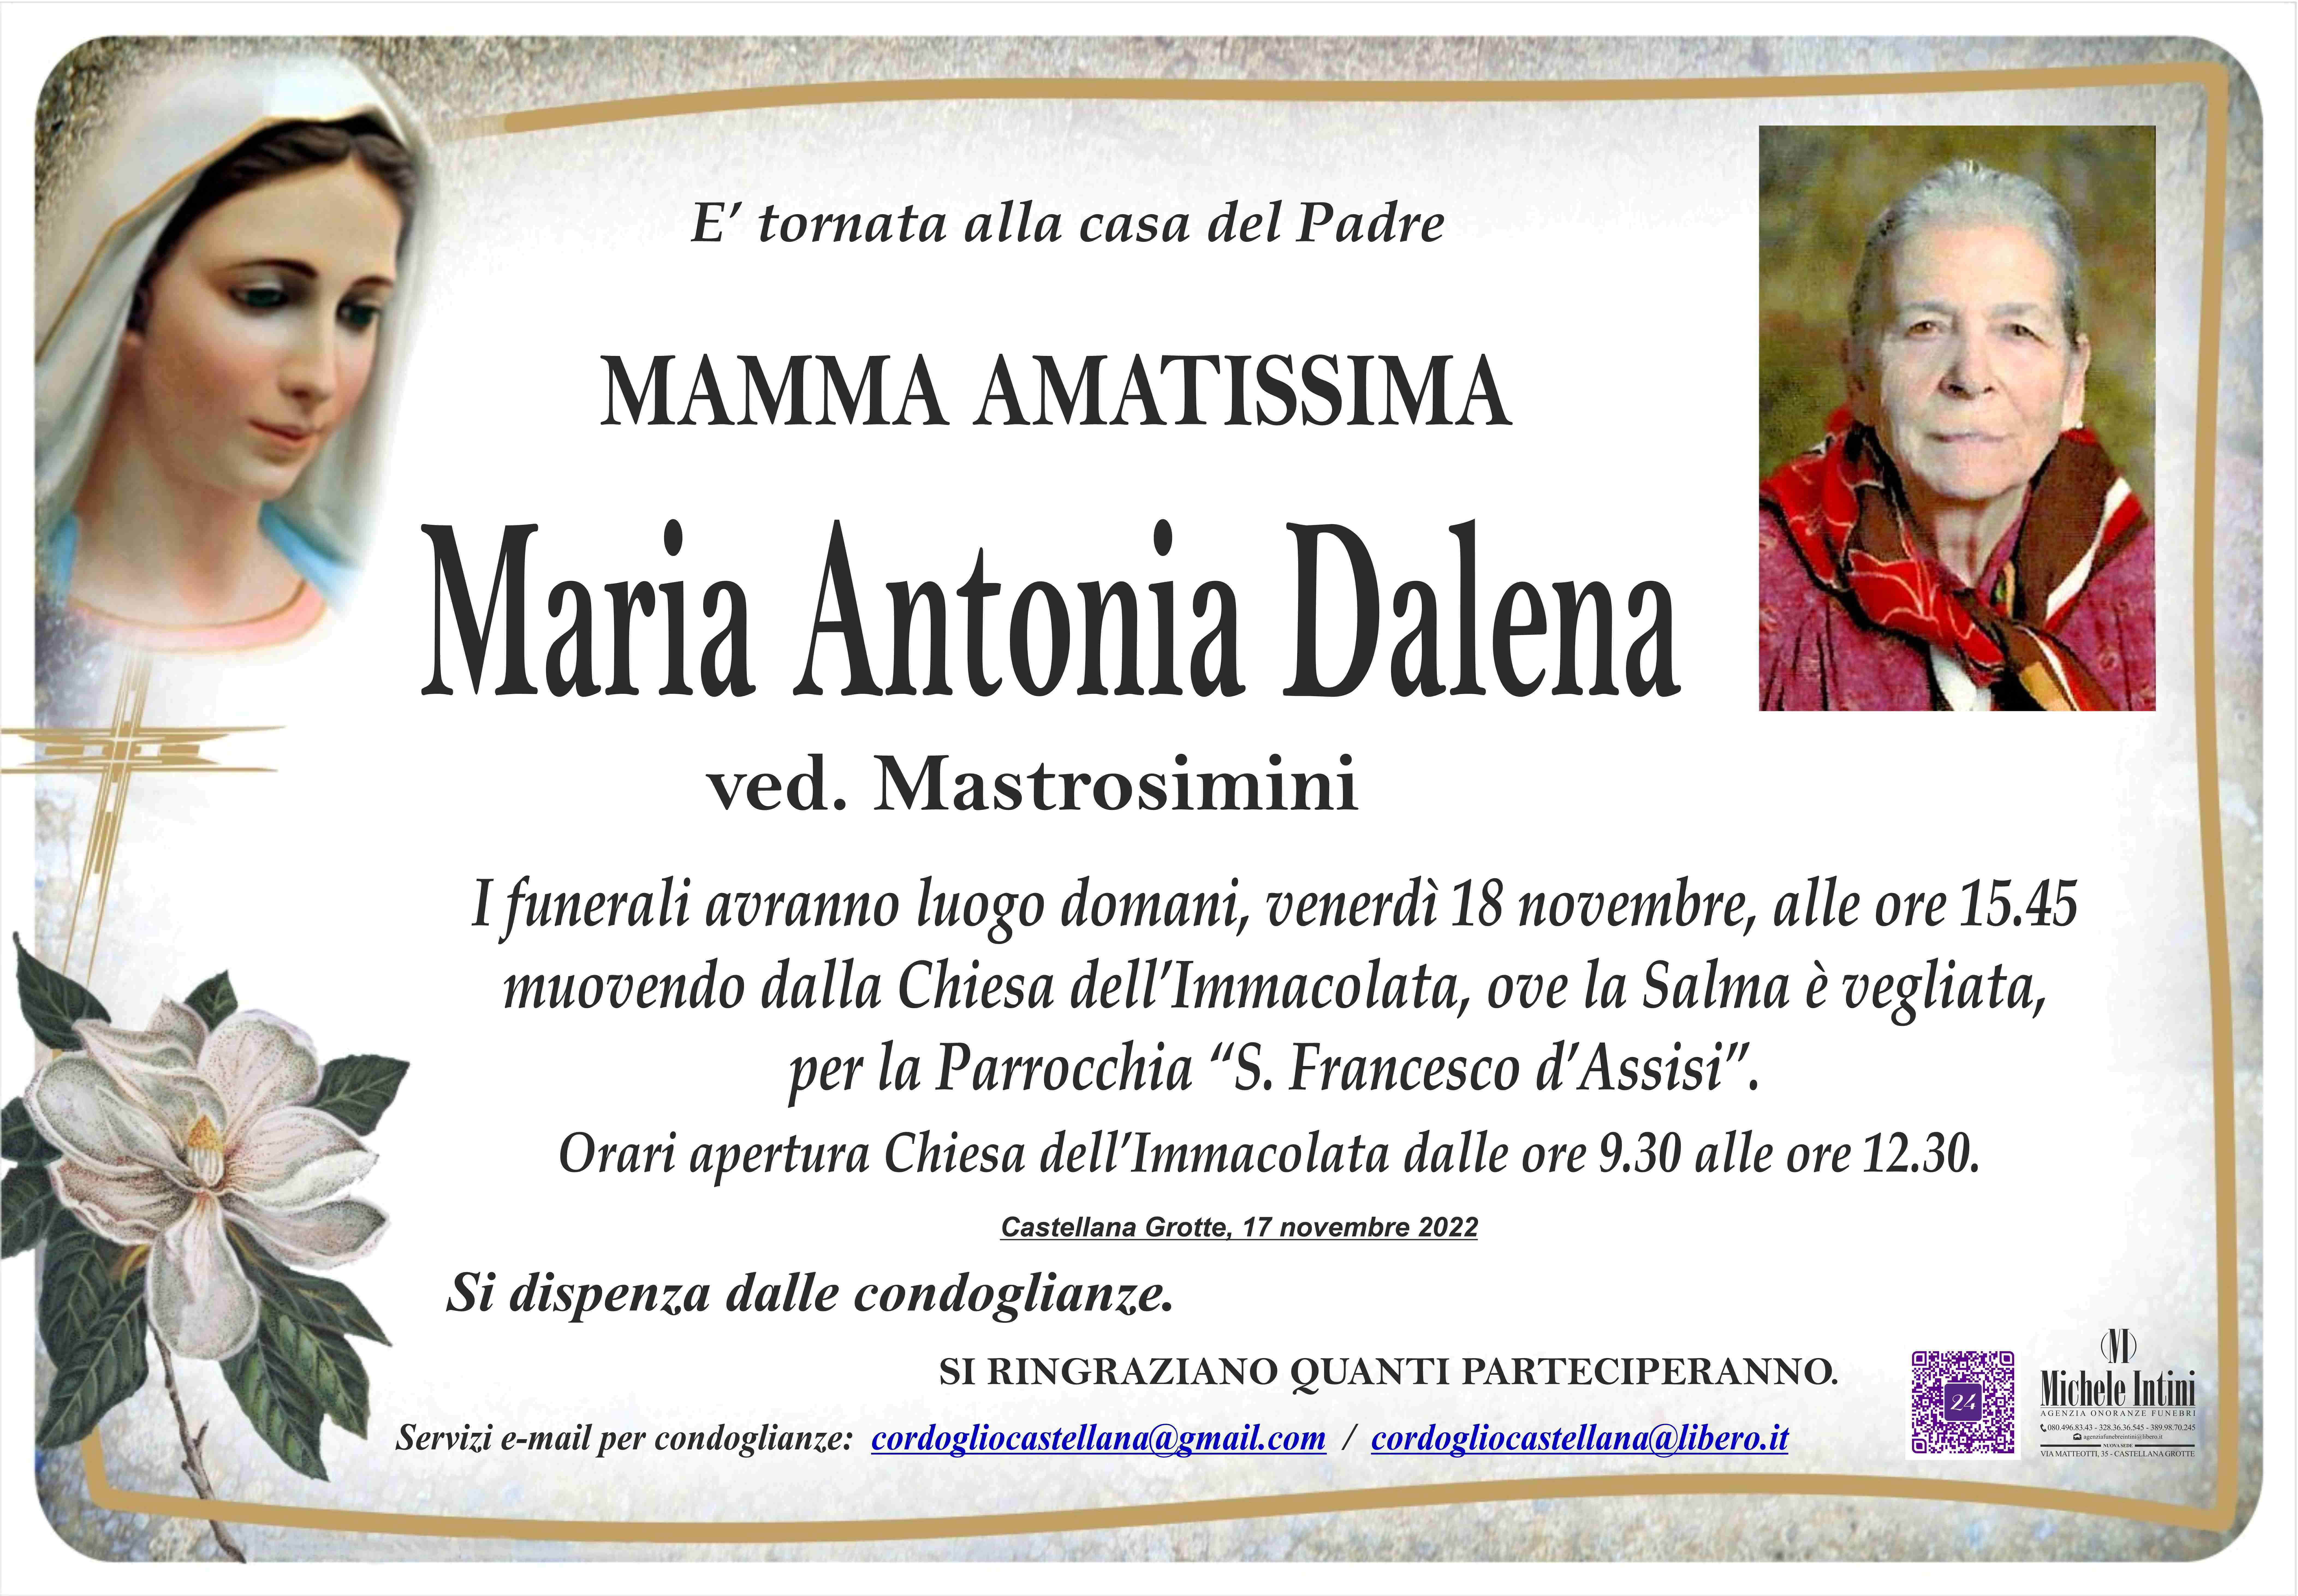 Maria Antonia Dalena